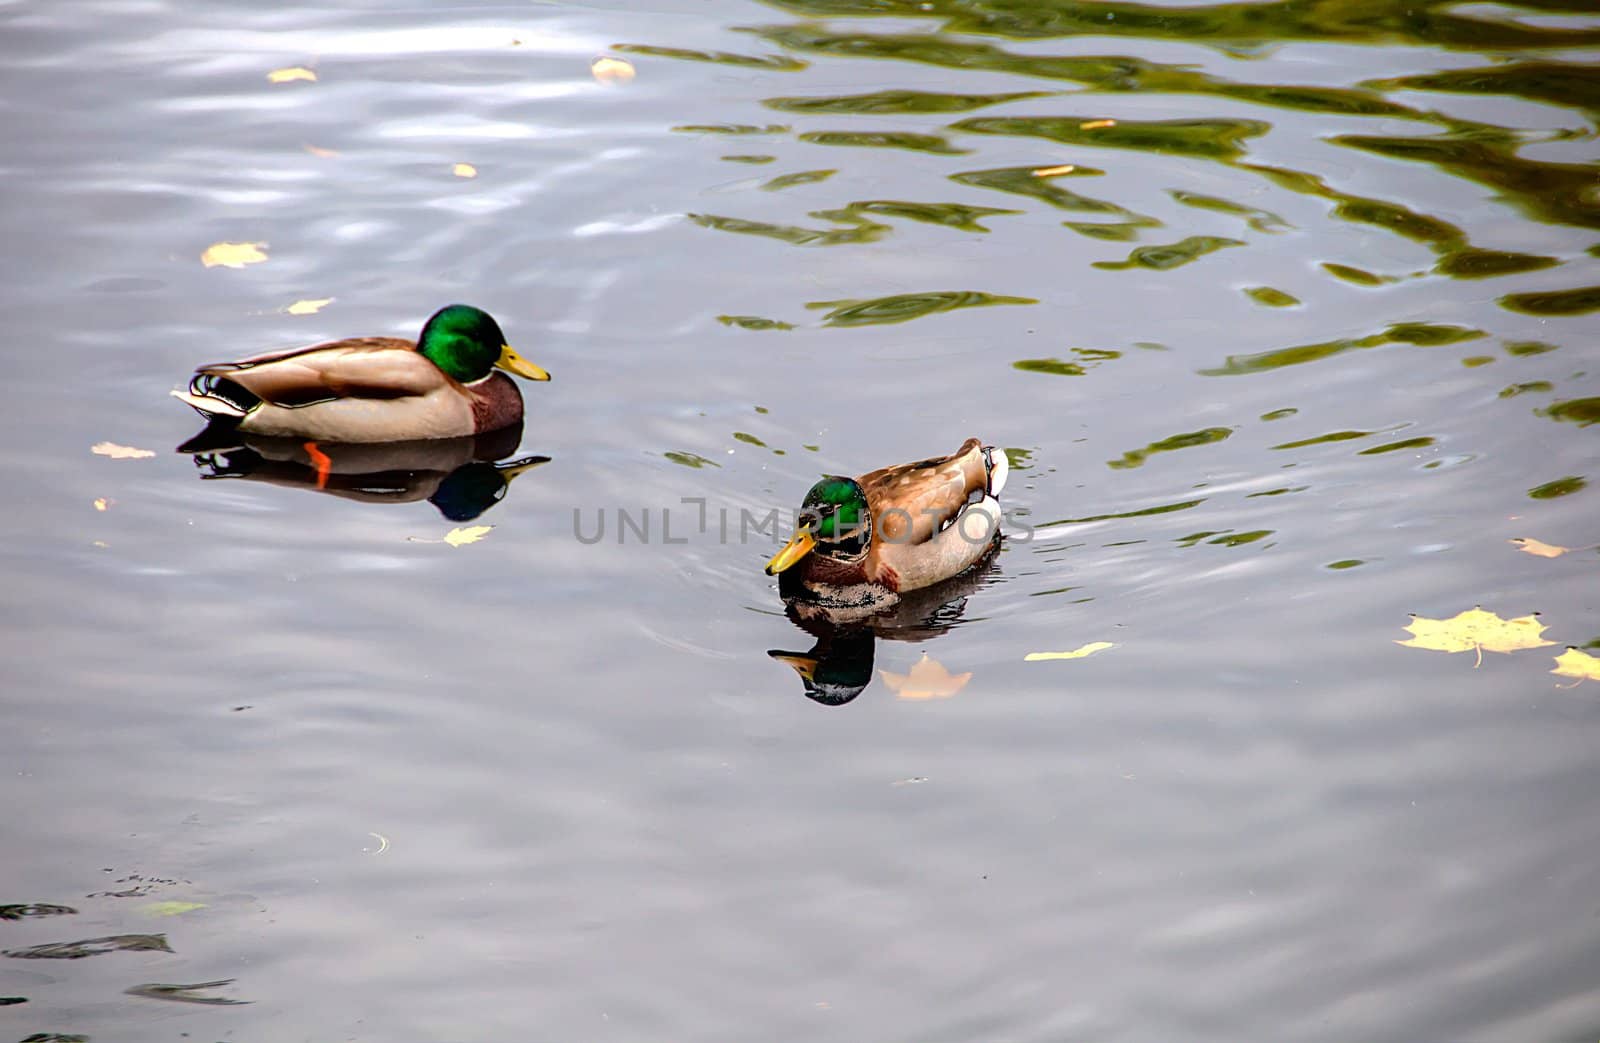 ducks on a lake in lazienki park, warsaw, poland